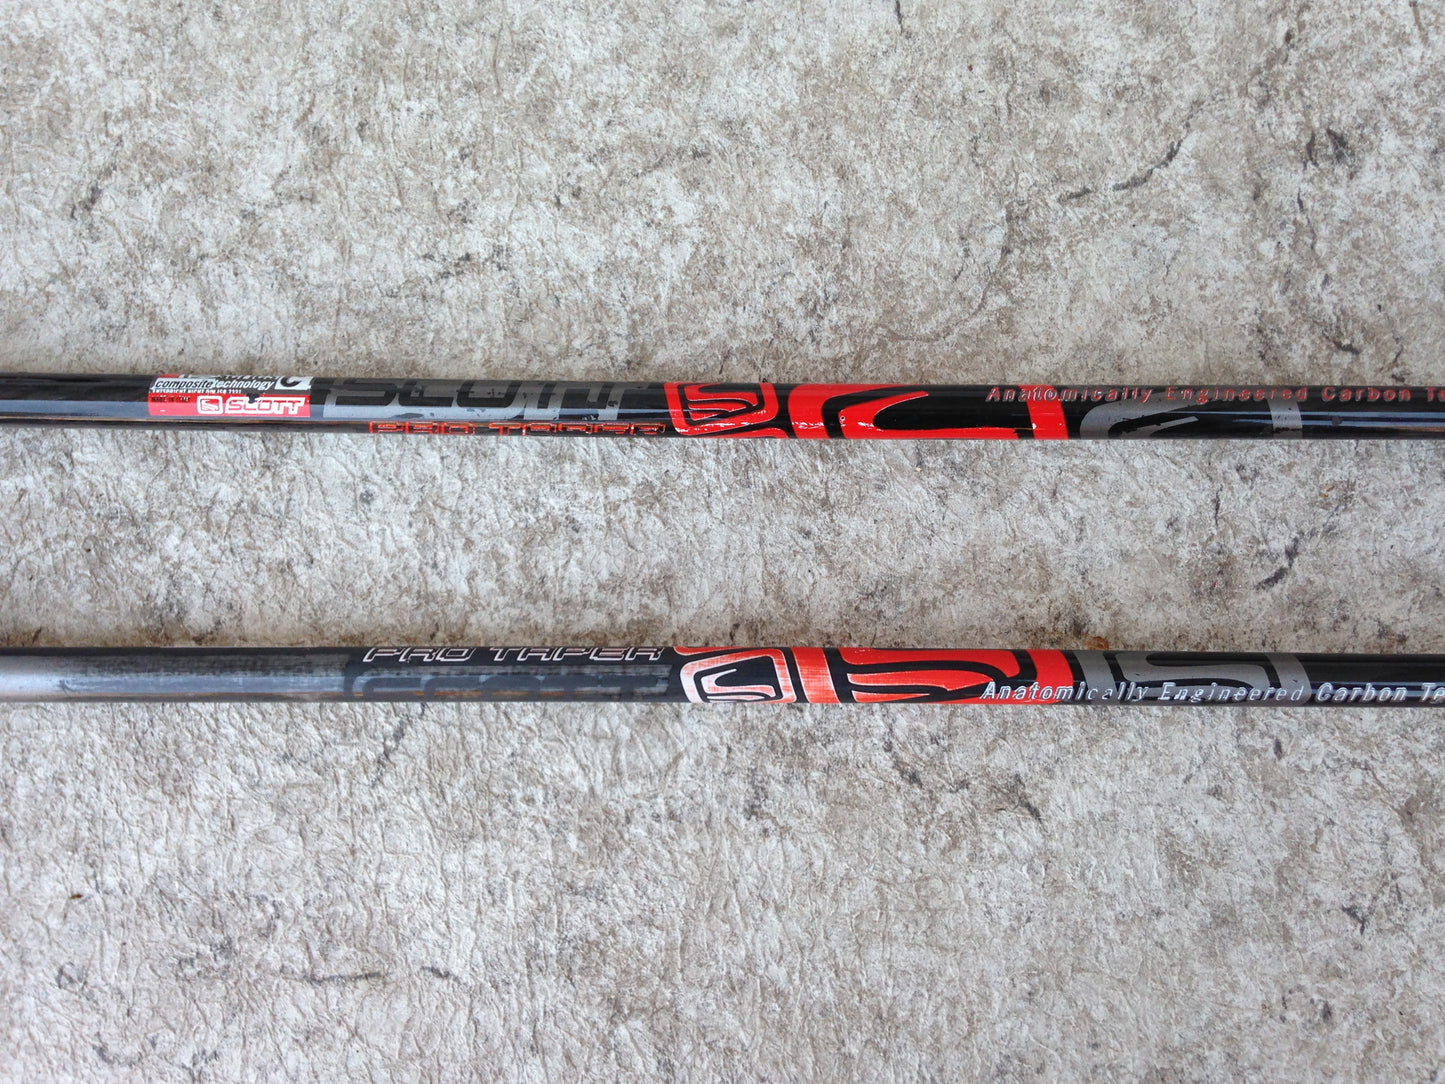 Ski Poles Adult Size 49 inch Scott Series Black Red Rubber Handles